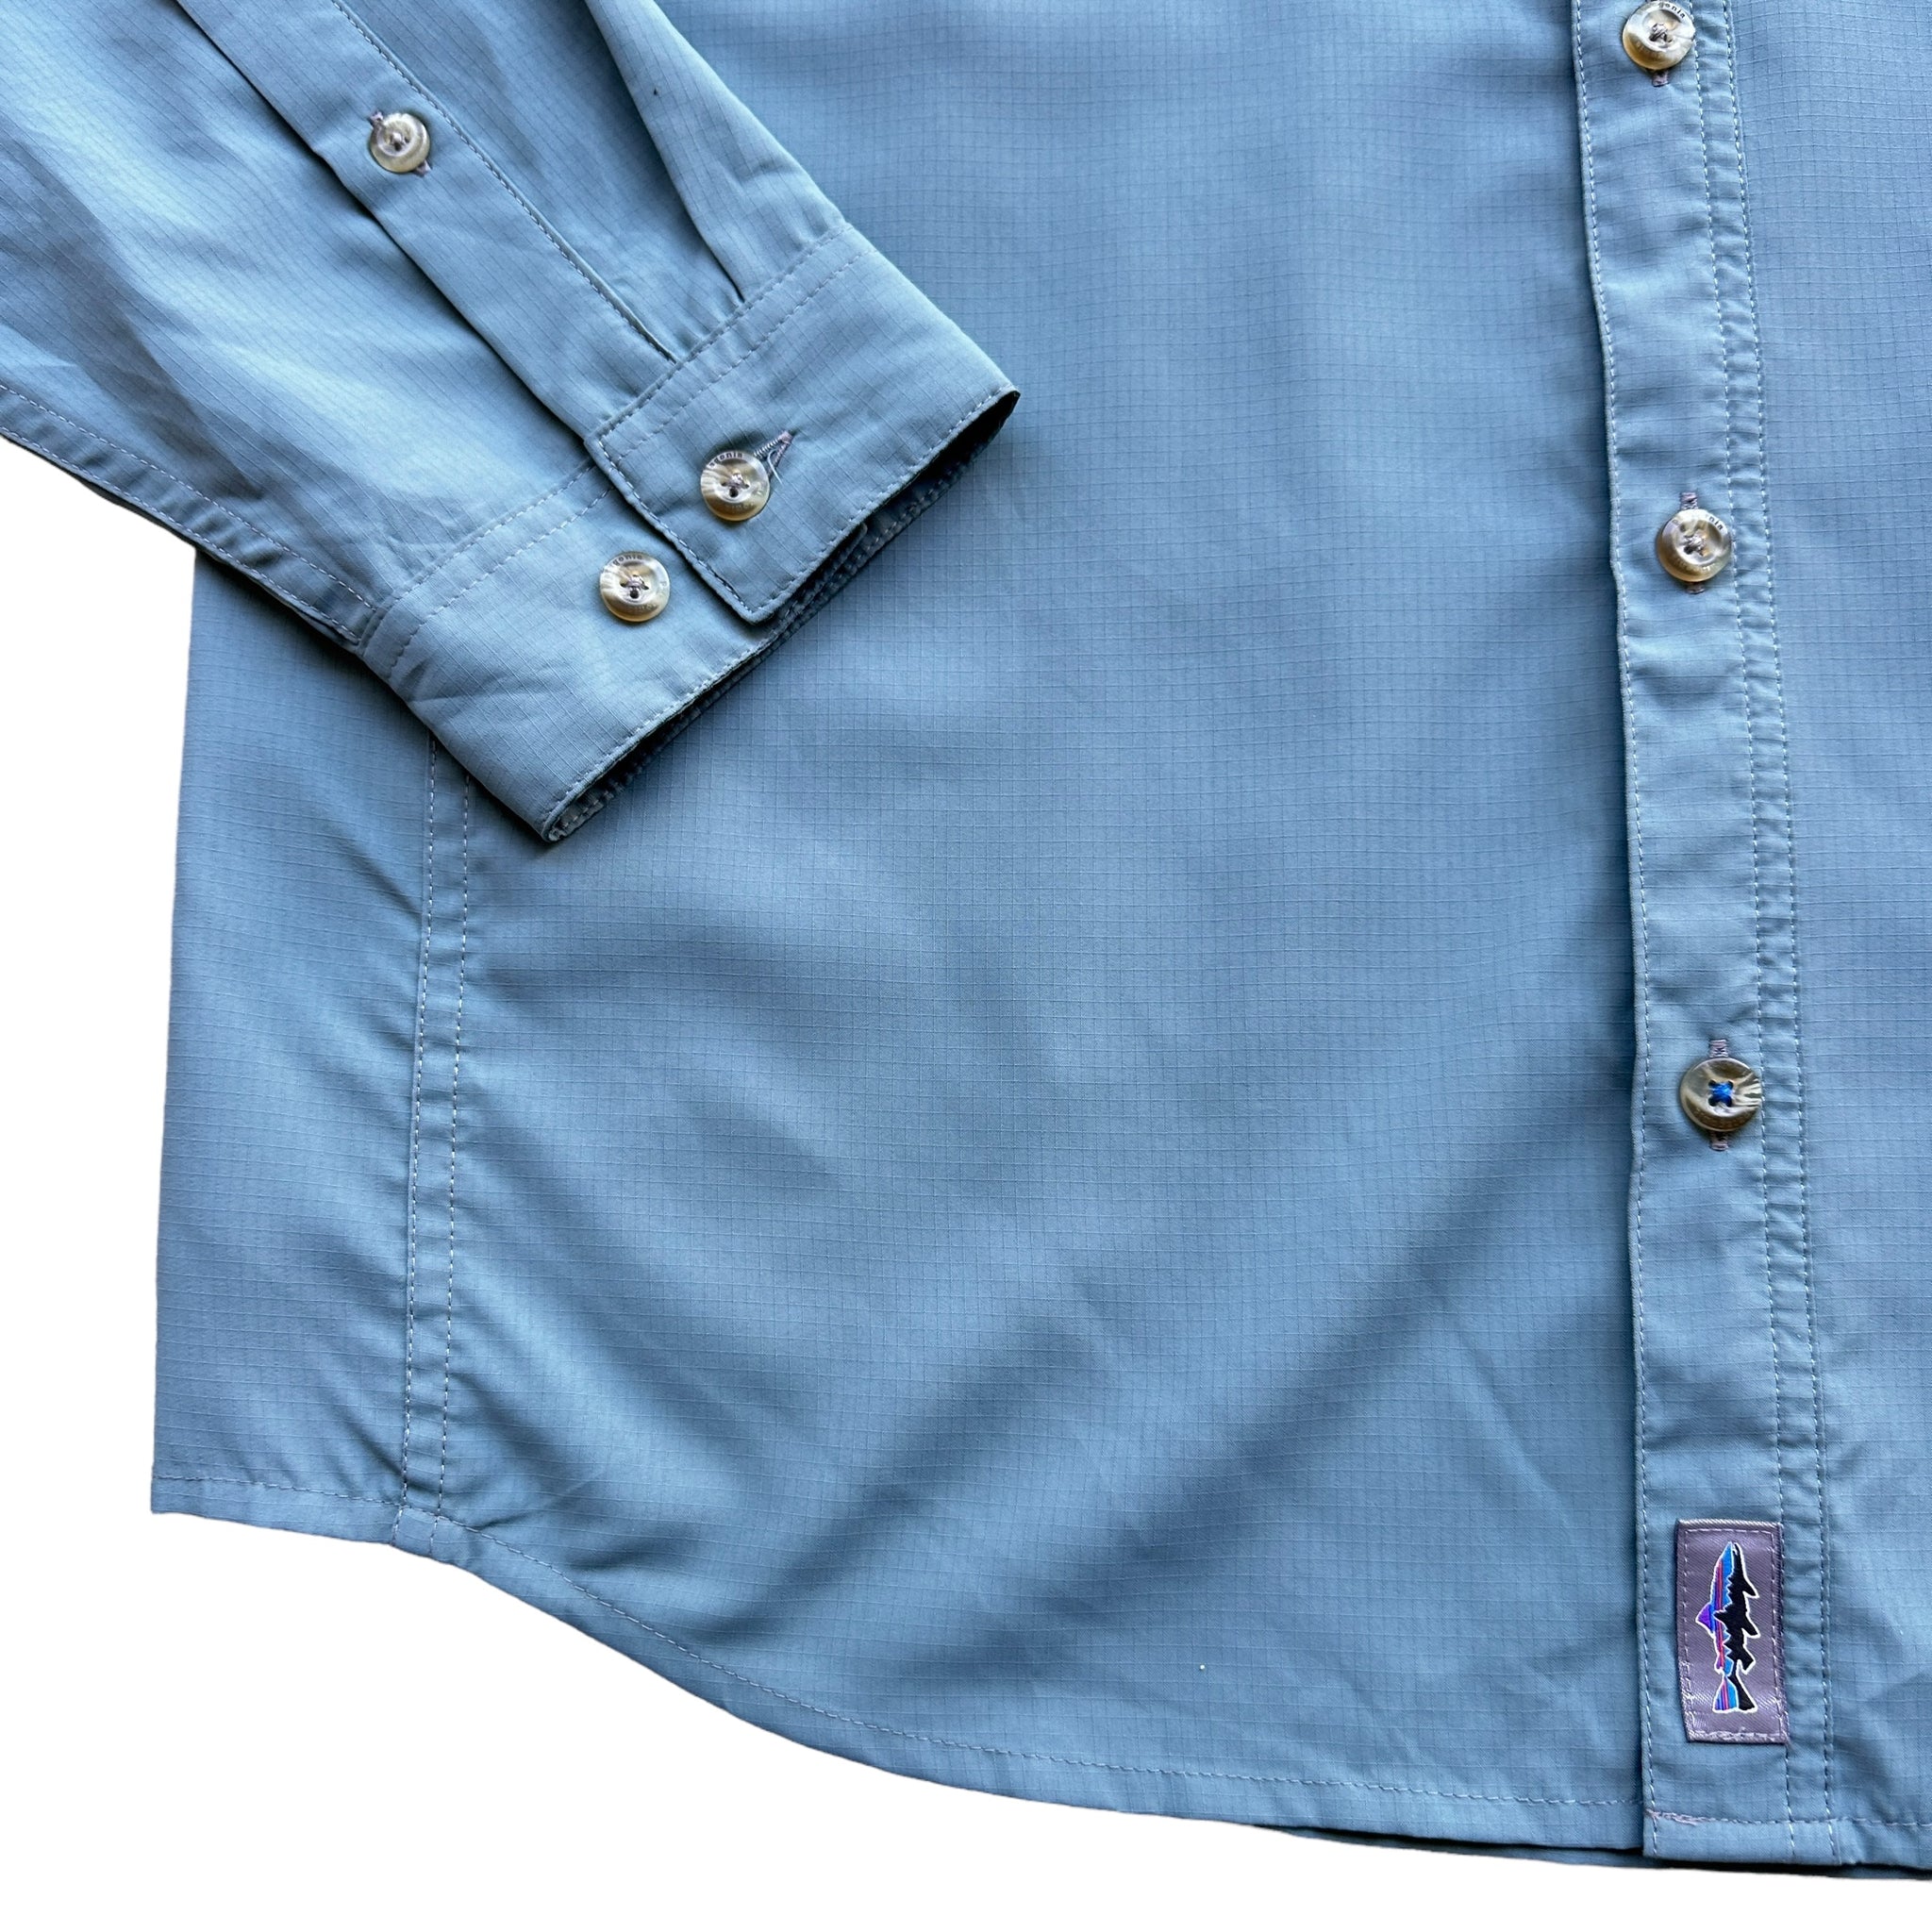 Patagonia fishing shirt light slate blue large